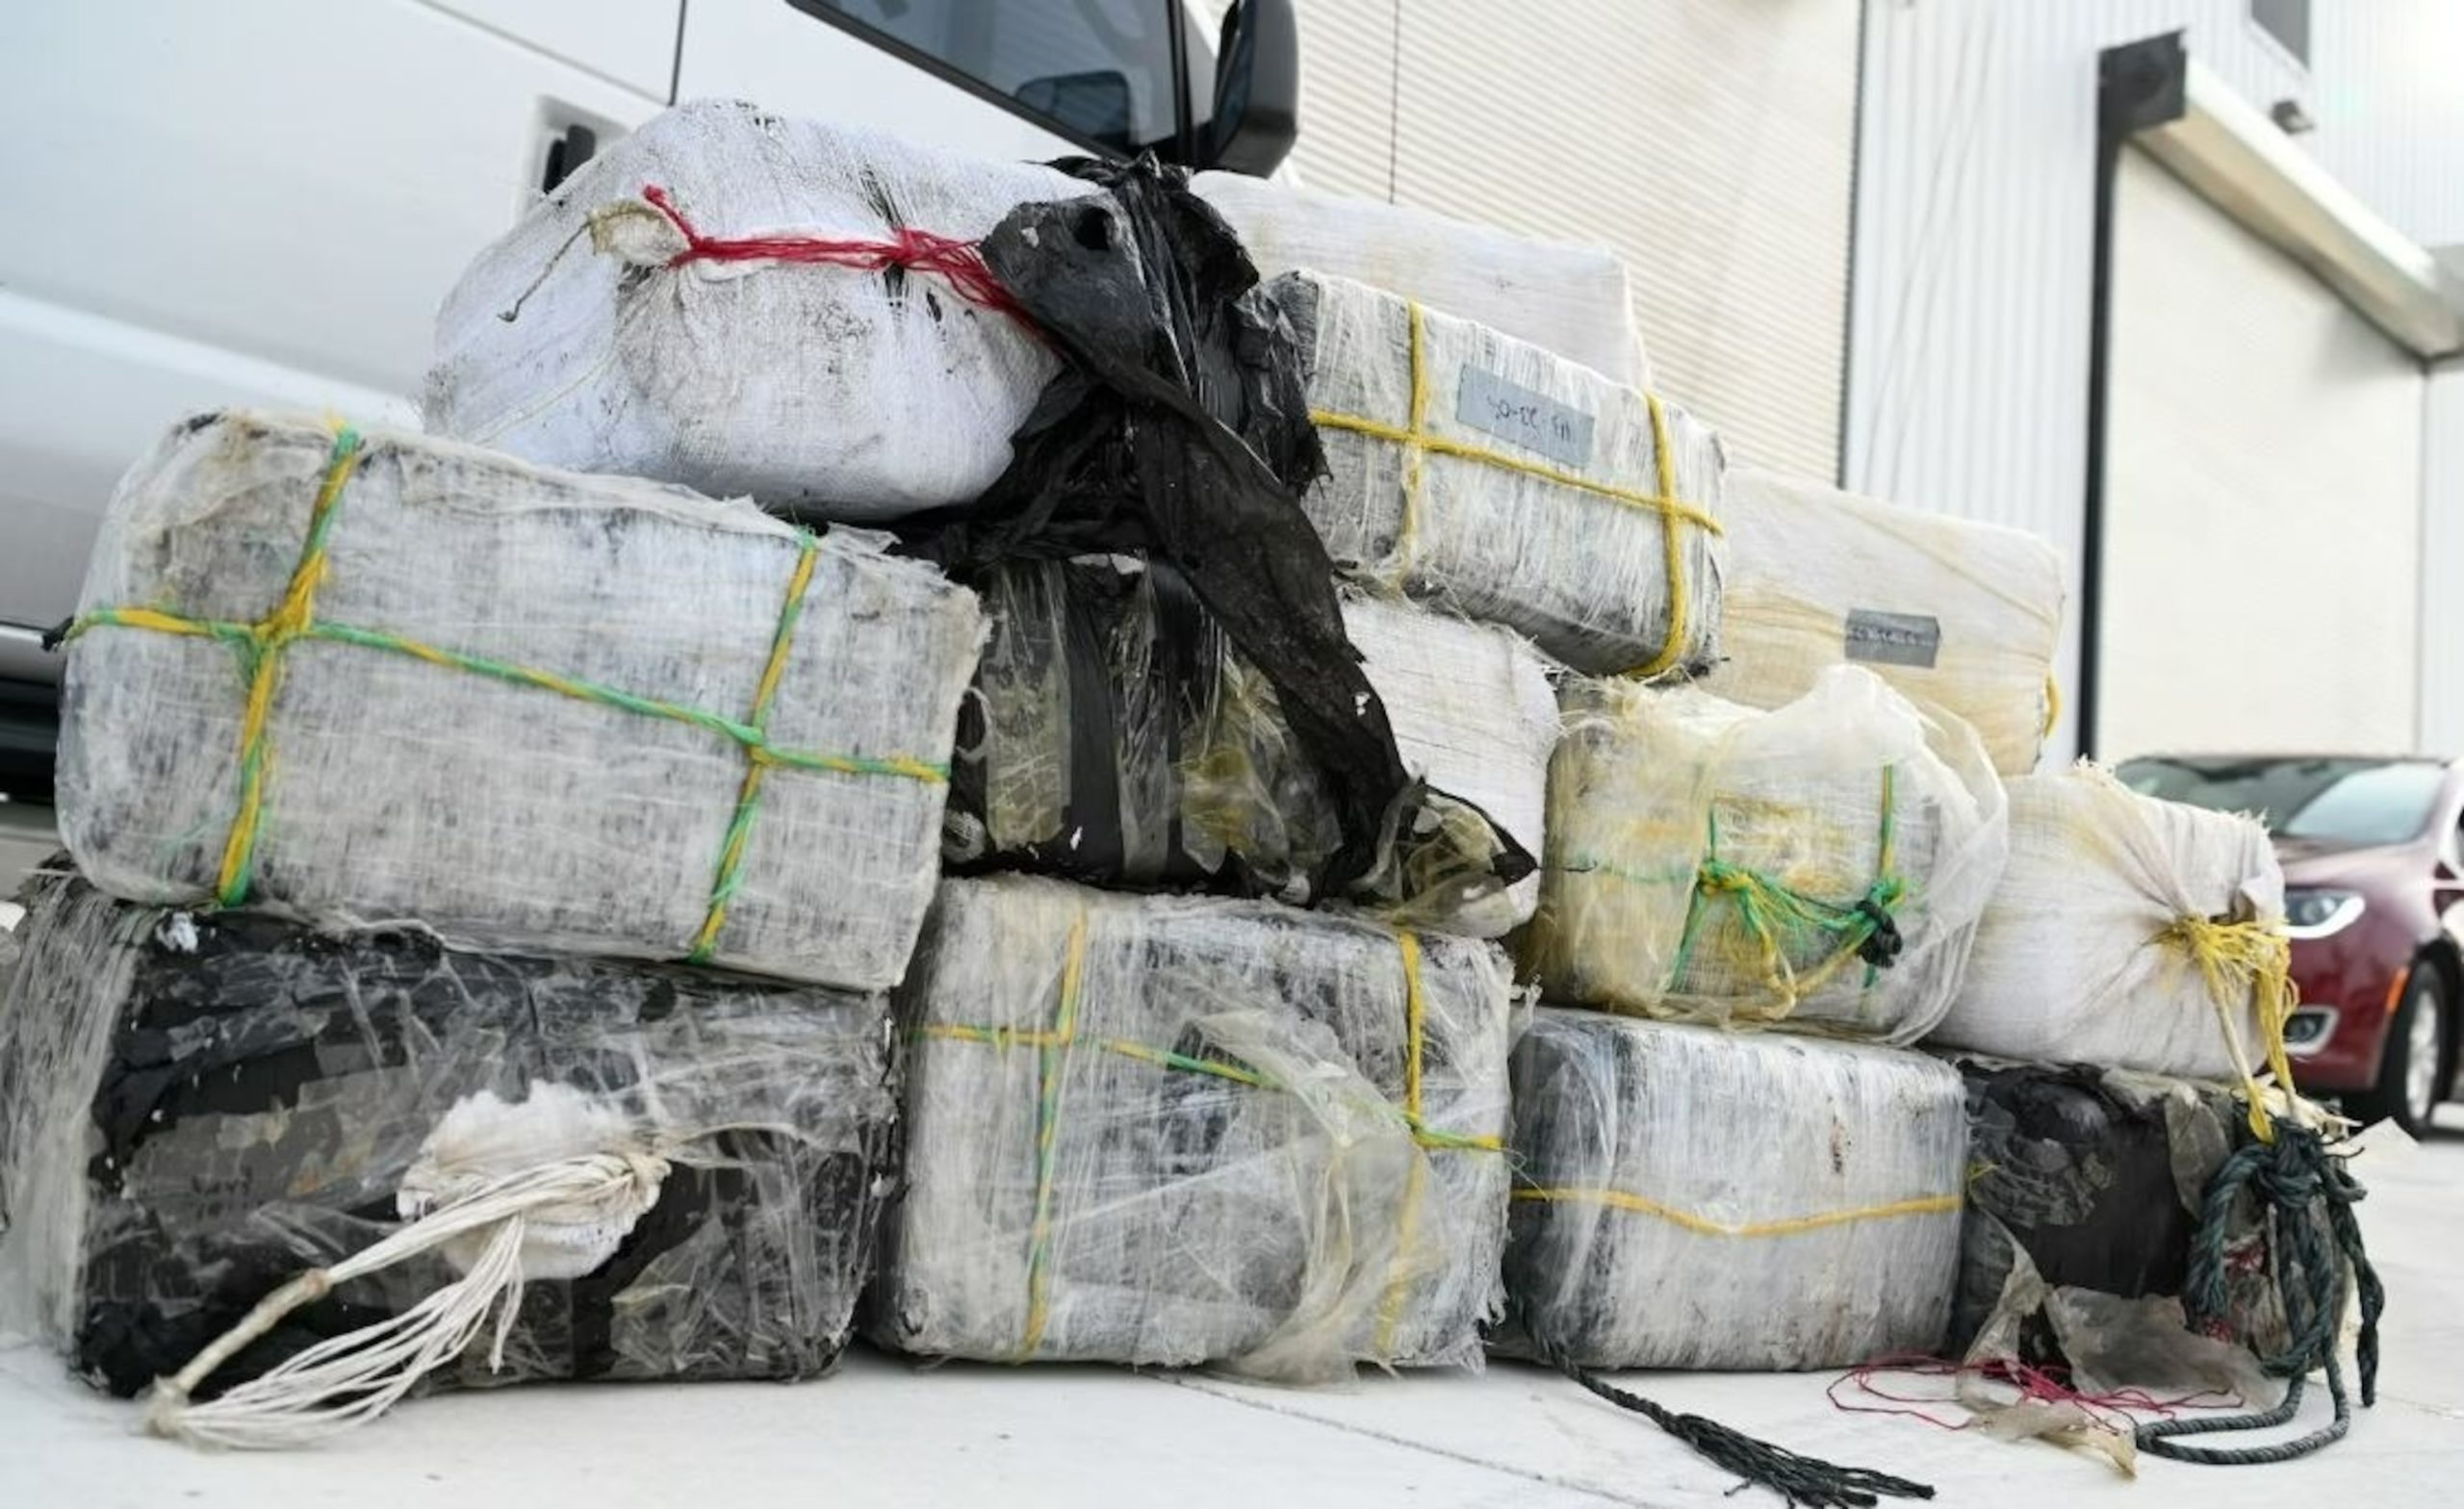 US Coast Guard intercepts massive cocaine shipment valued at $32 million near Florida